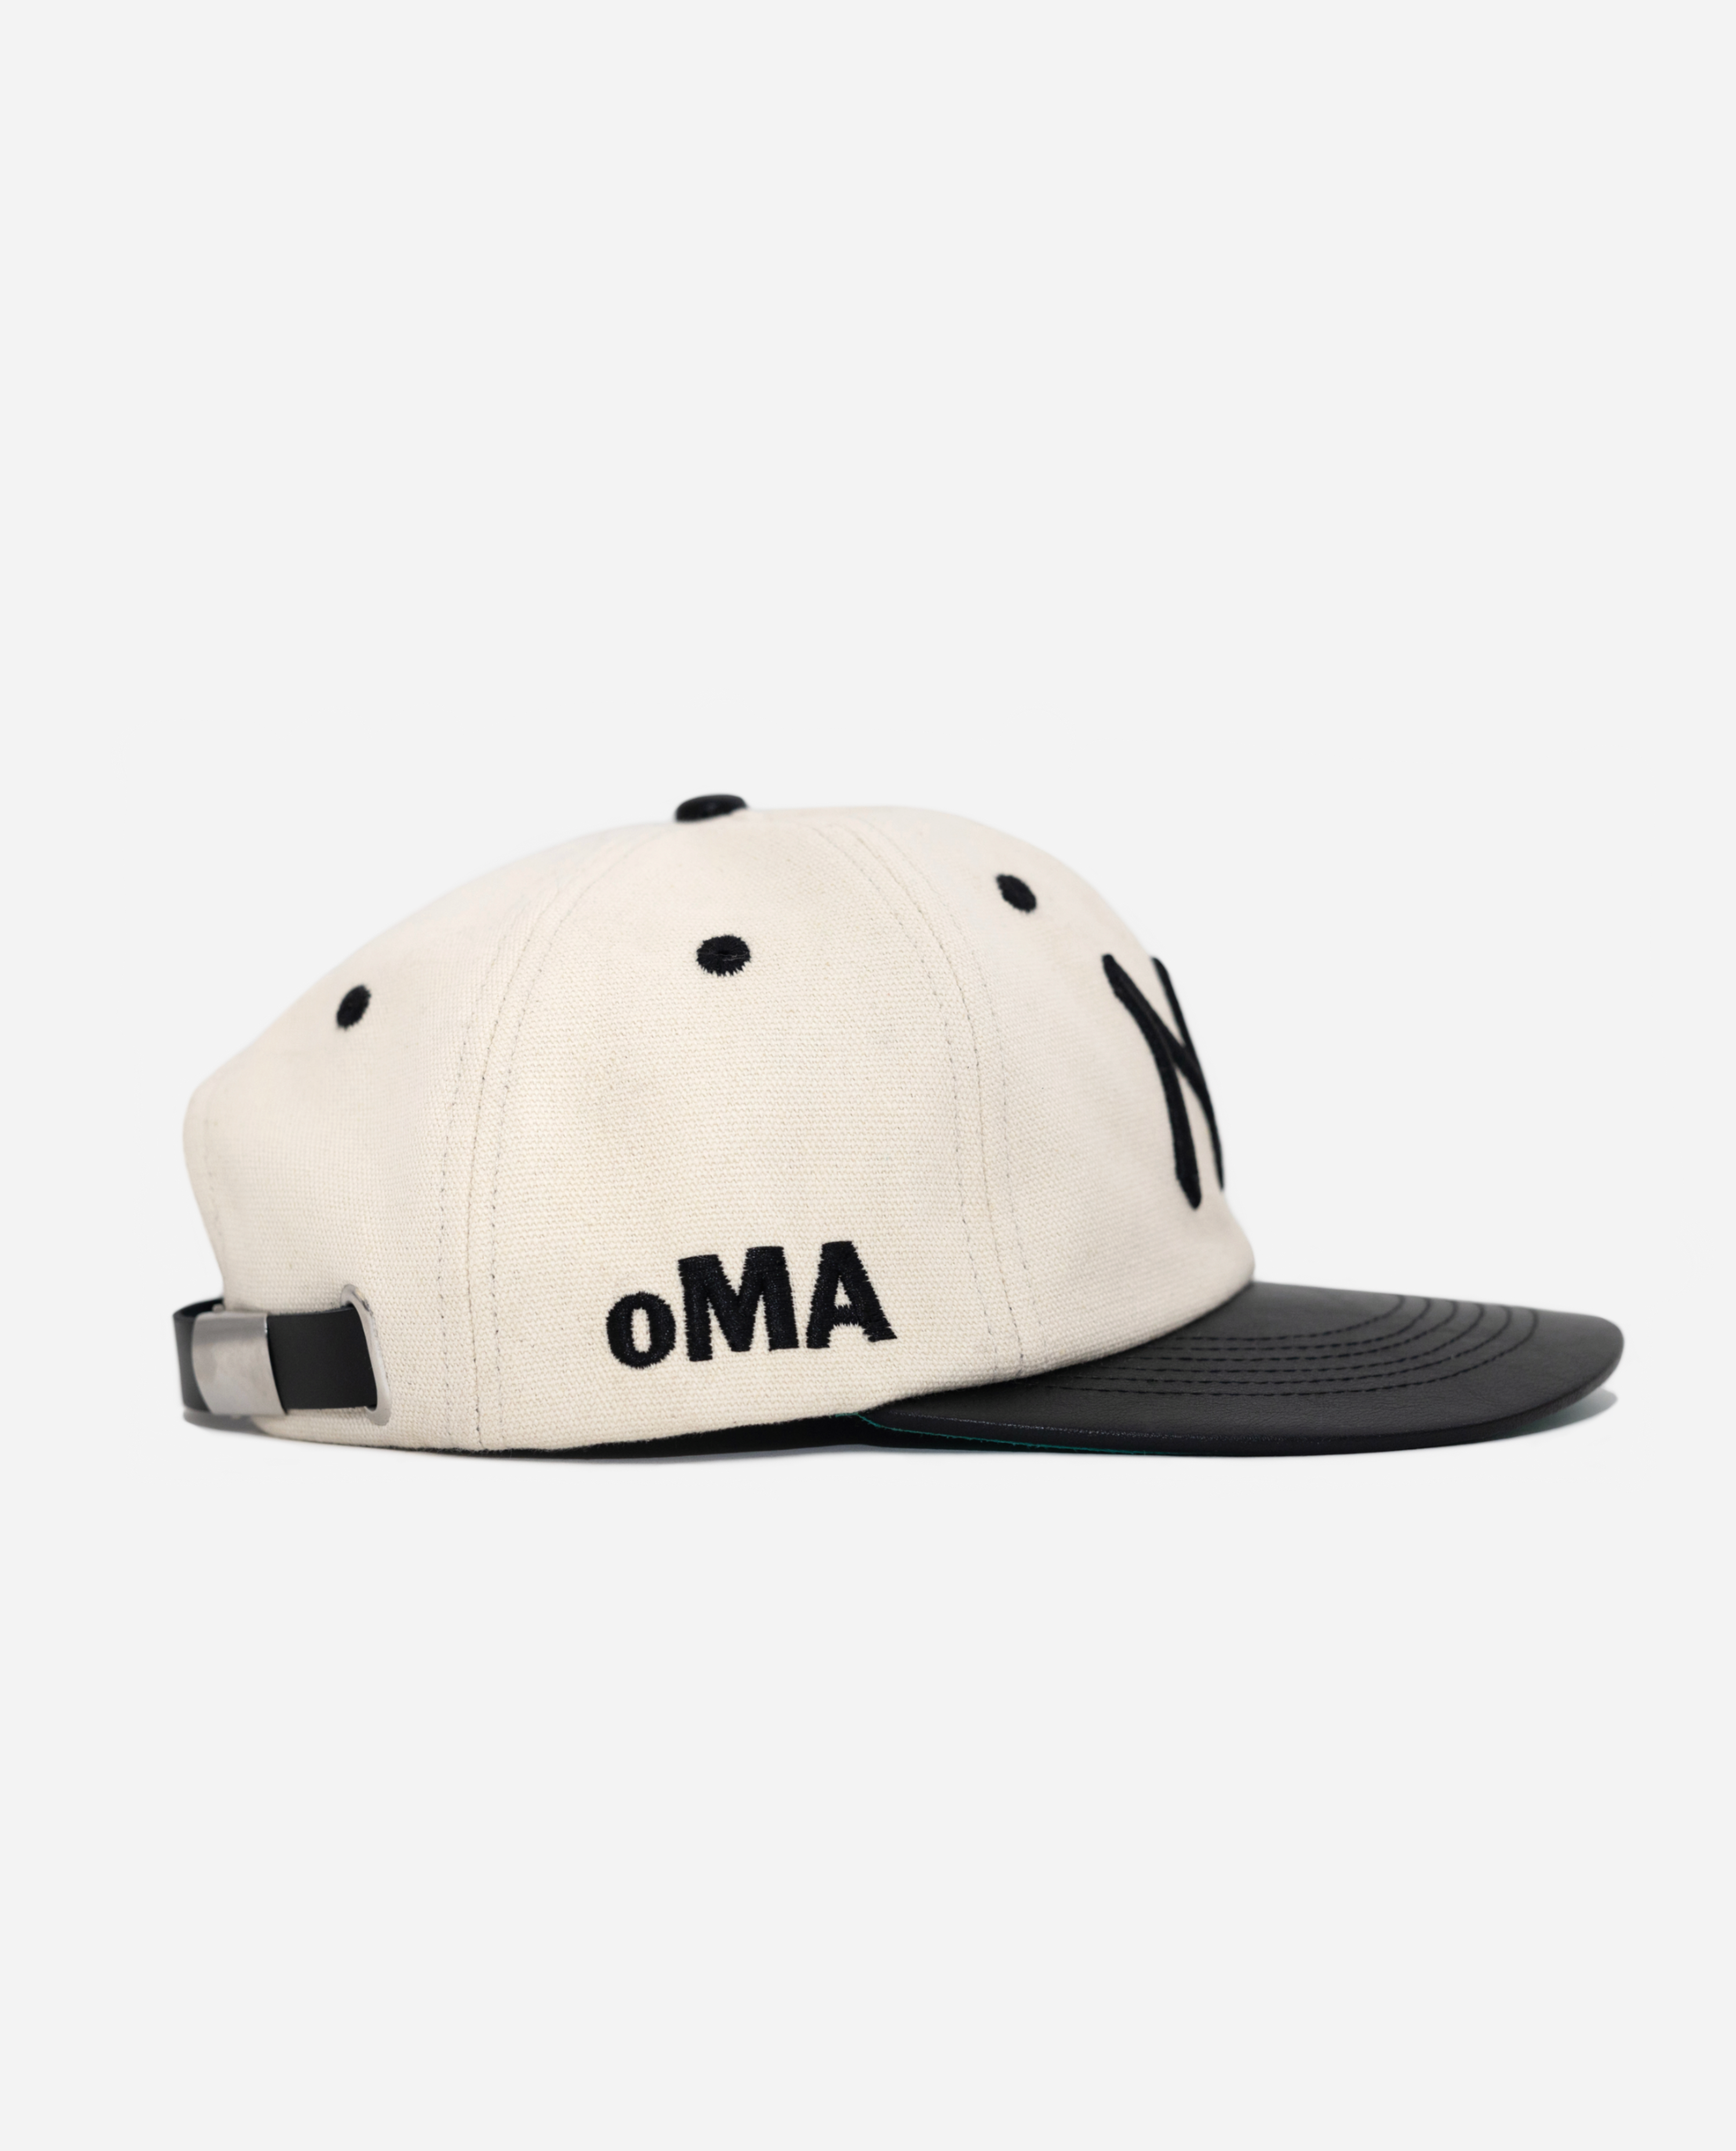 oMA NEW YORK HAT (IVORY/BLACK LEATHER)